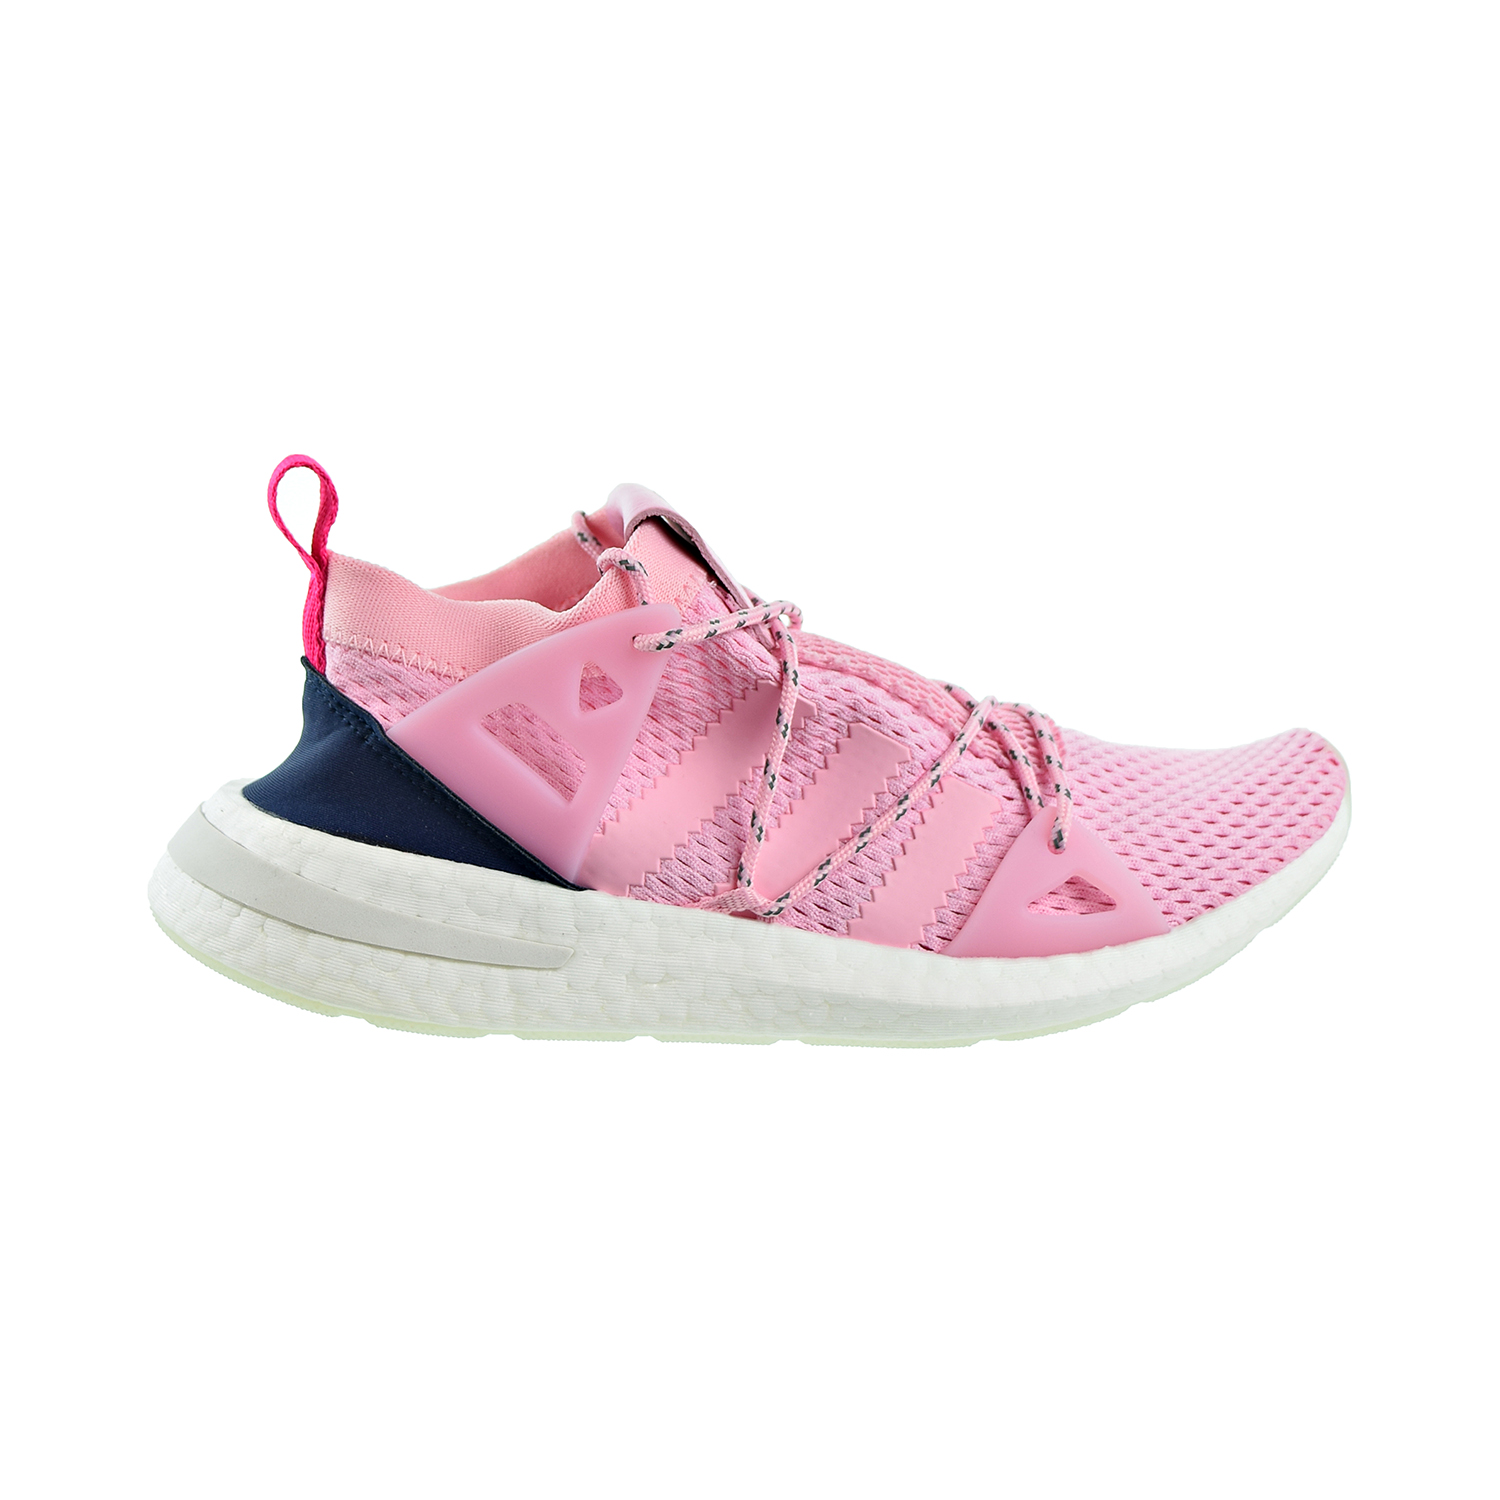 Adidas Arkyn Women's Shoes True Pink 